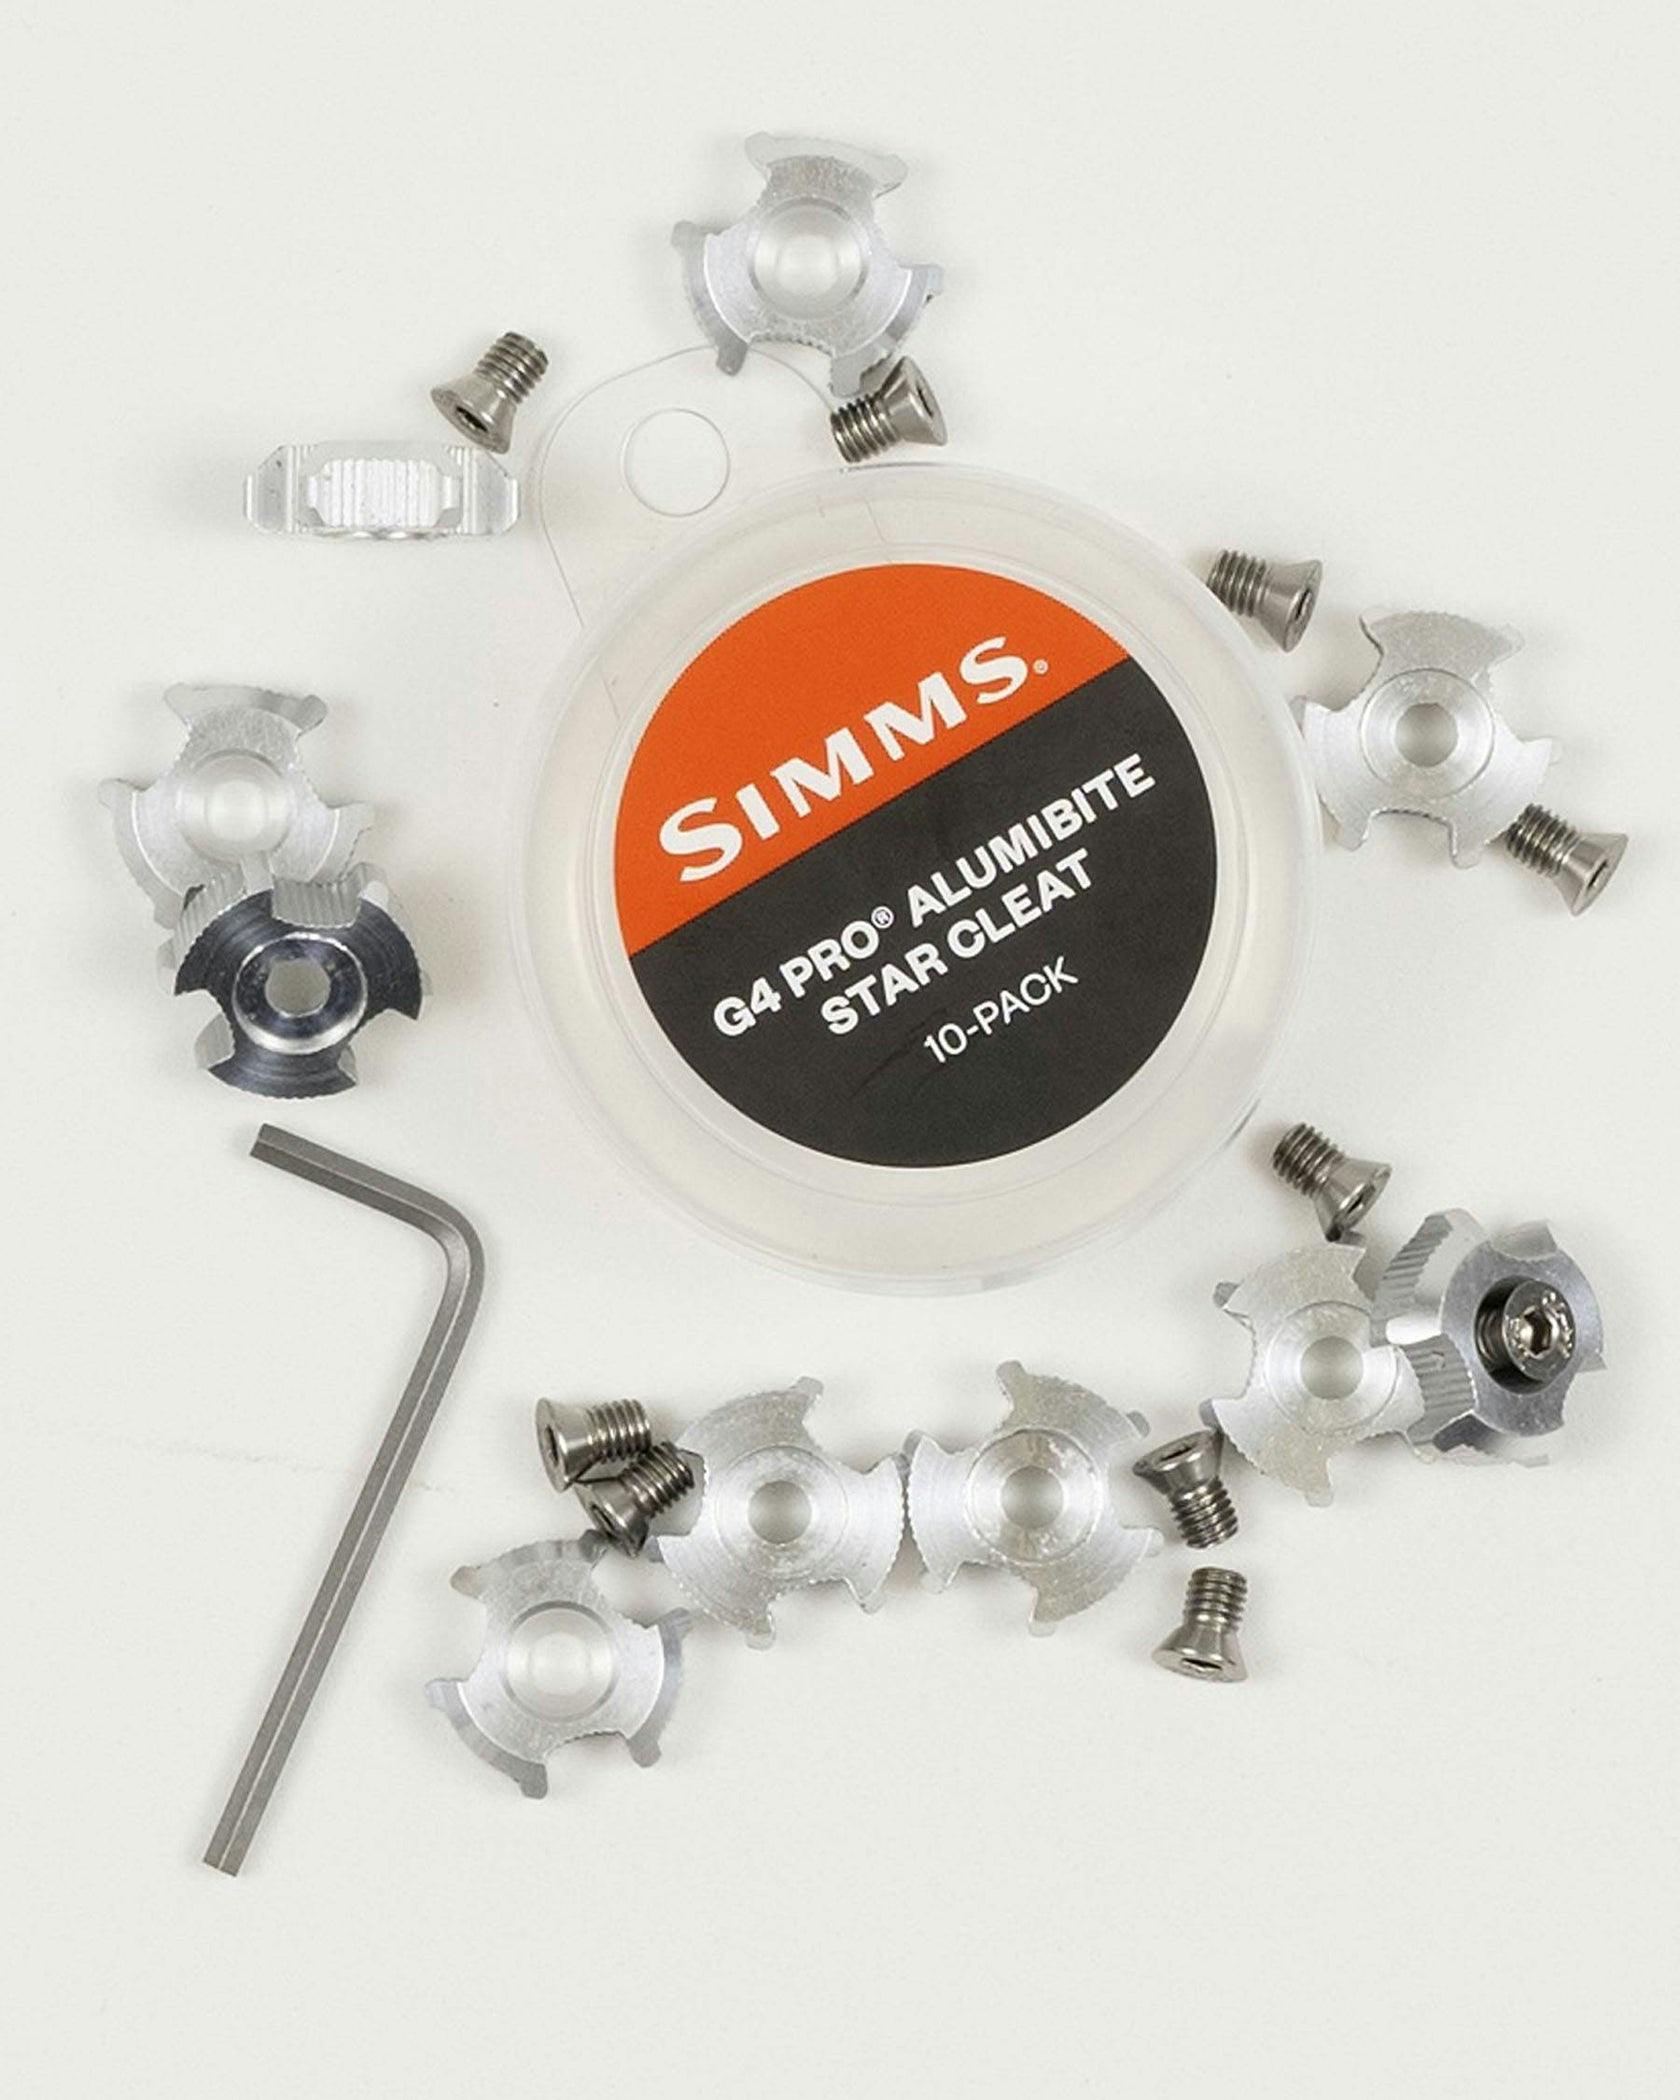 Simms G4 Pro AlumiBite™ Cleat